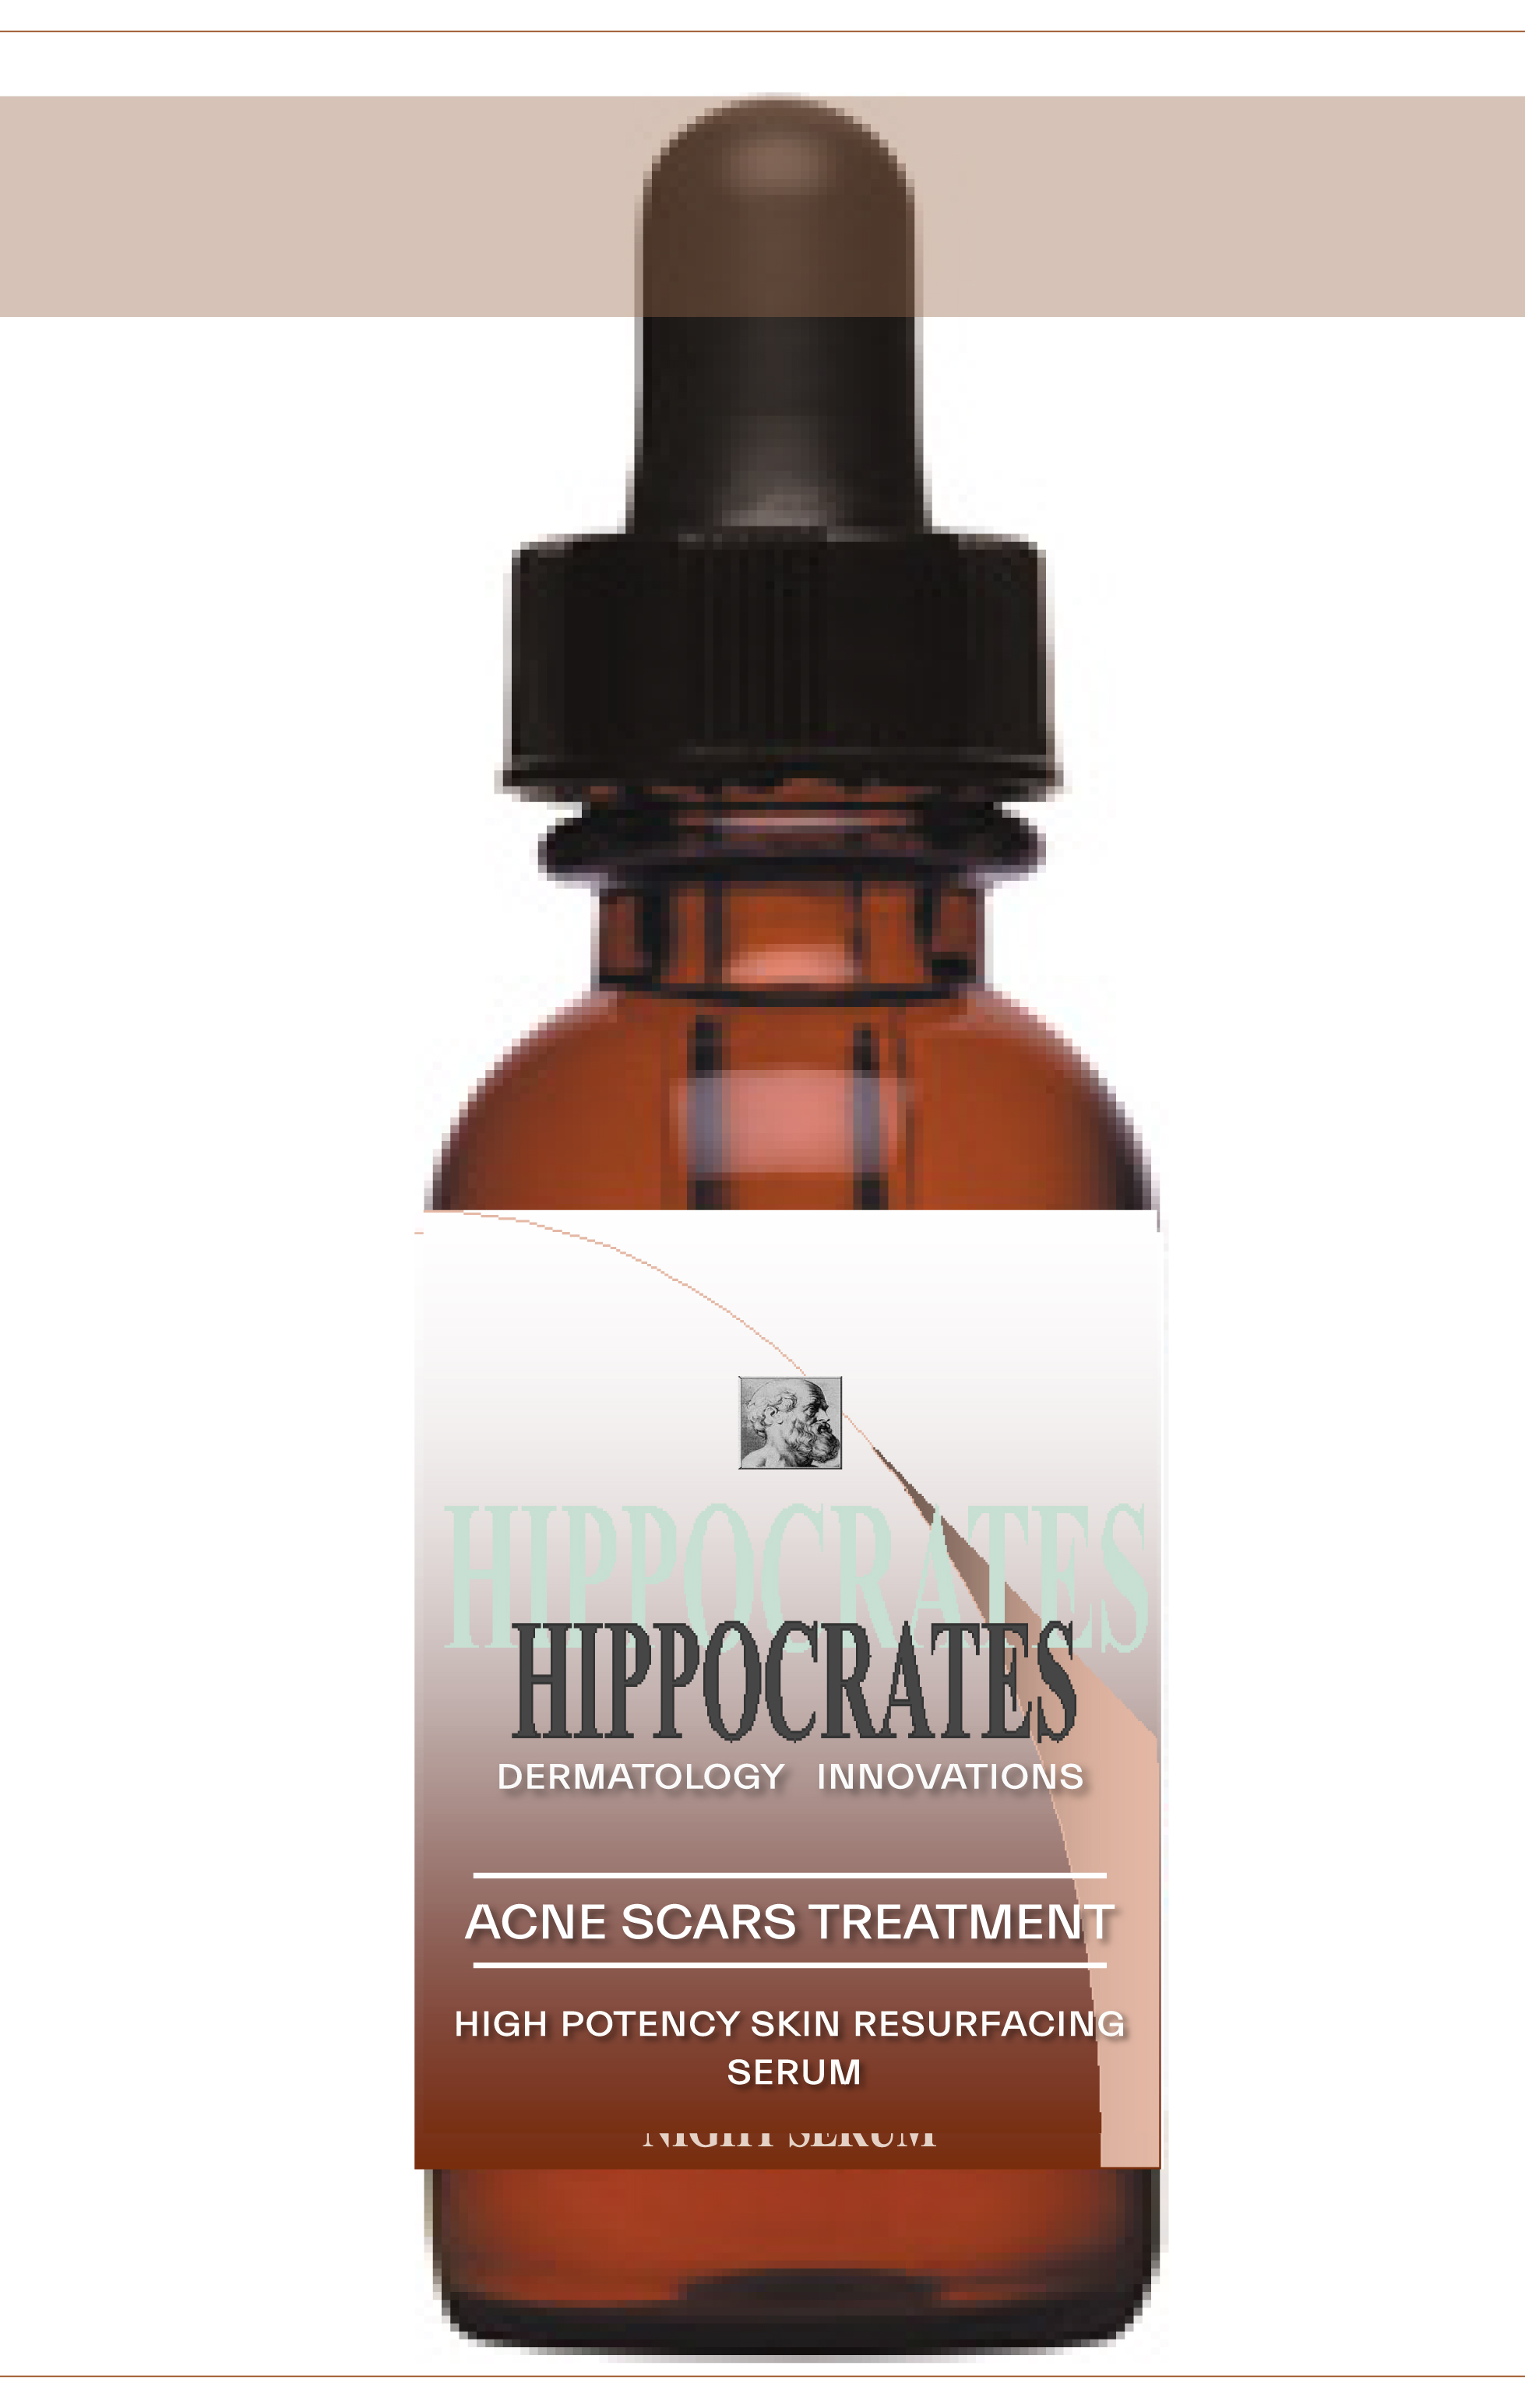 acne scars treatment, high potency serum for skin resurfacing